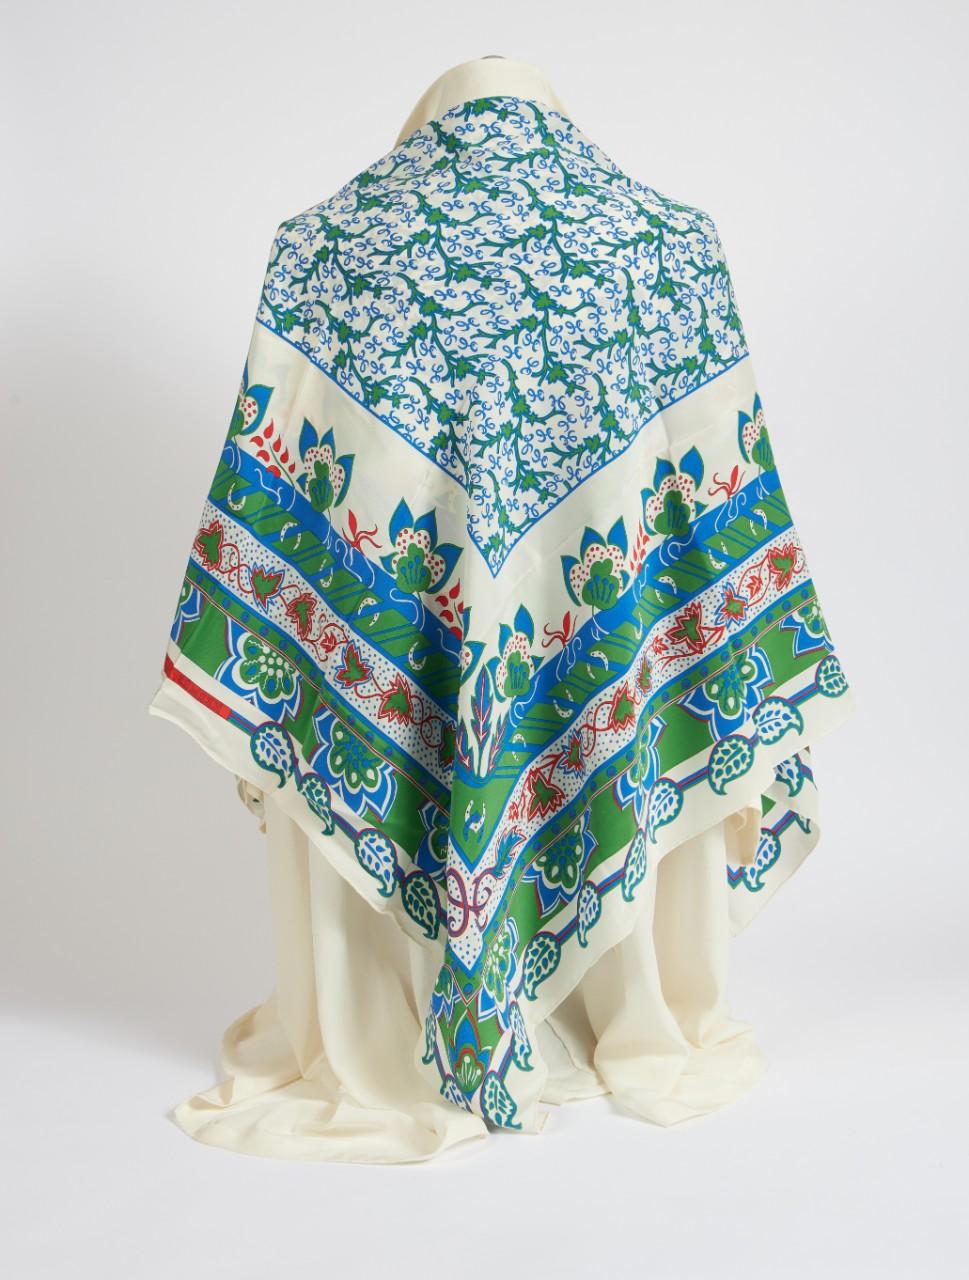 Hermès silk chiffon shawl in blue, white, and green. Hand-rolled hem.
